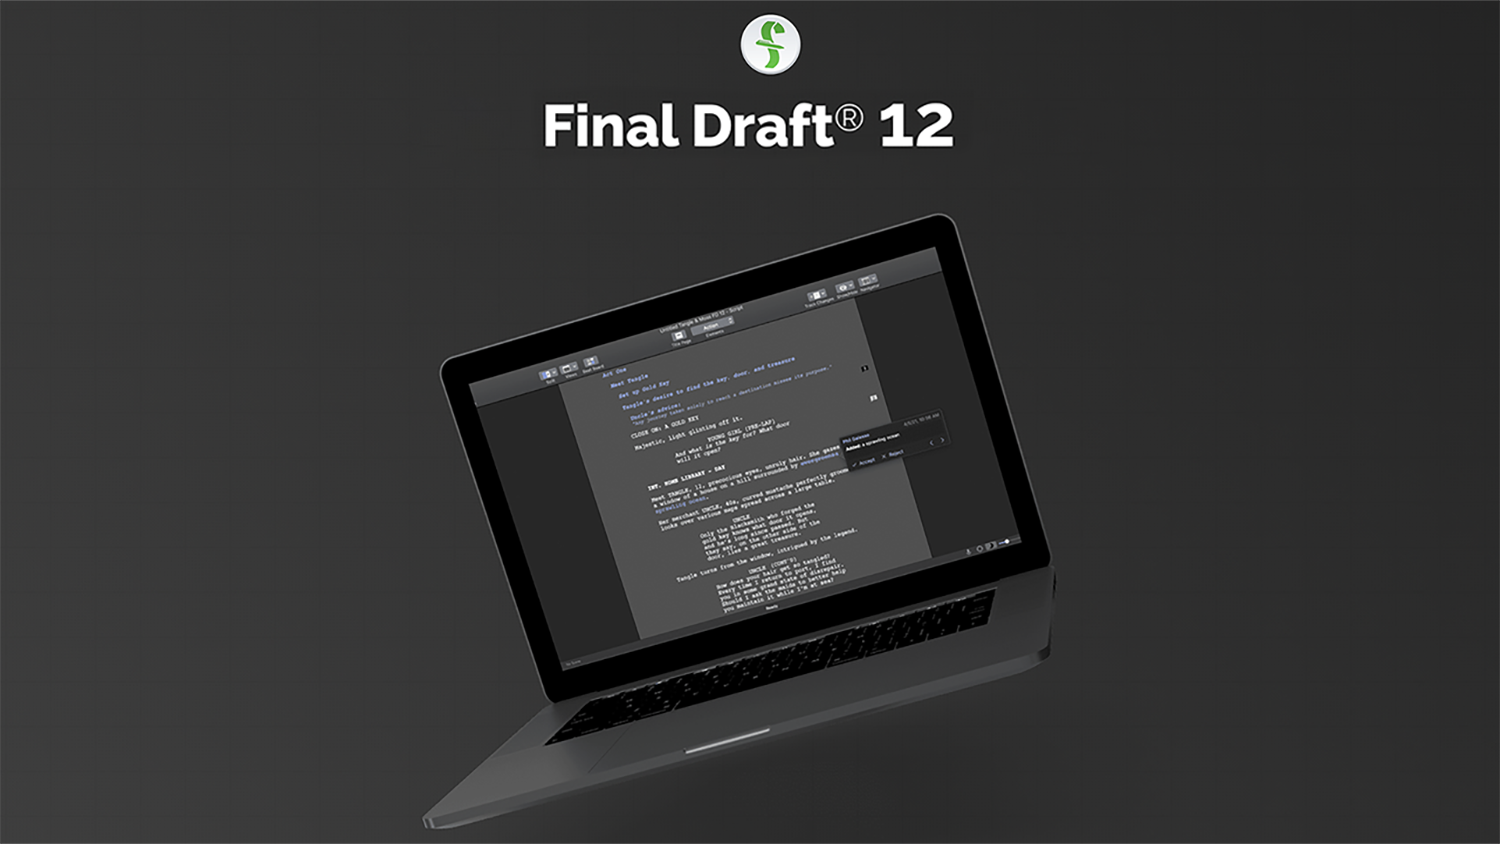 screenwriter software for mac